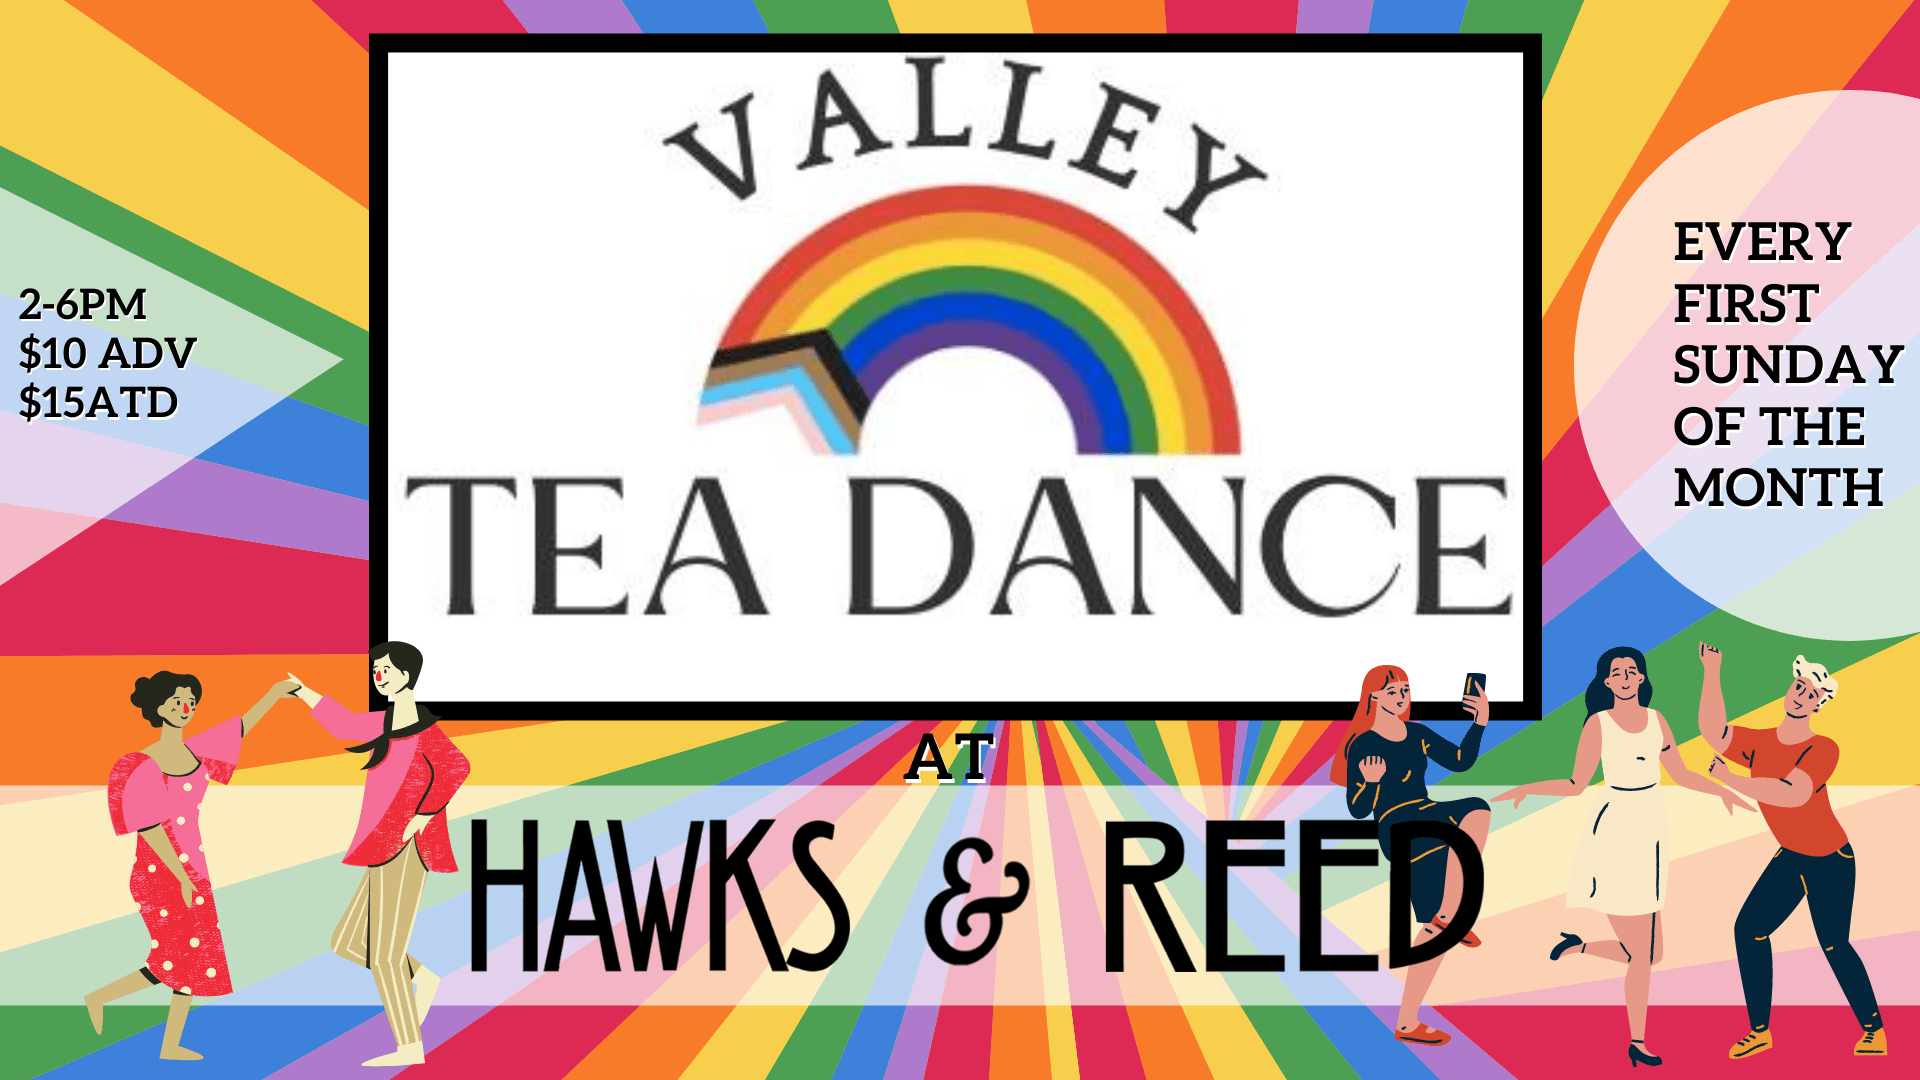 Valley Tea Dance At Hawks & Reed